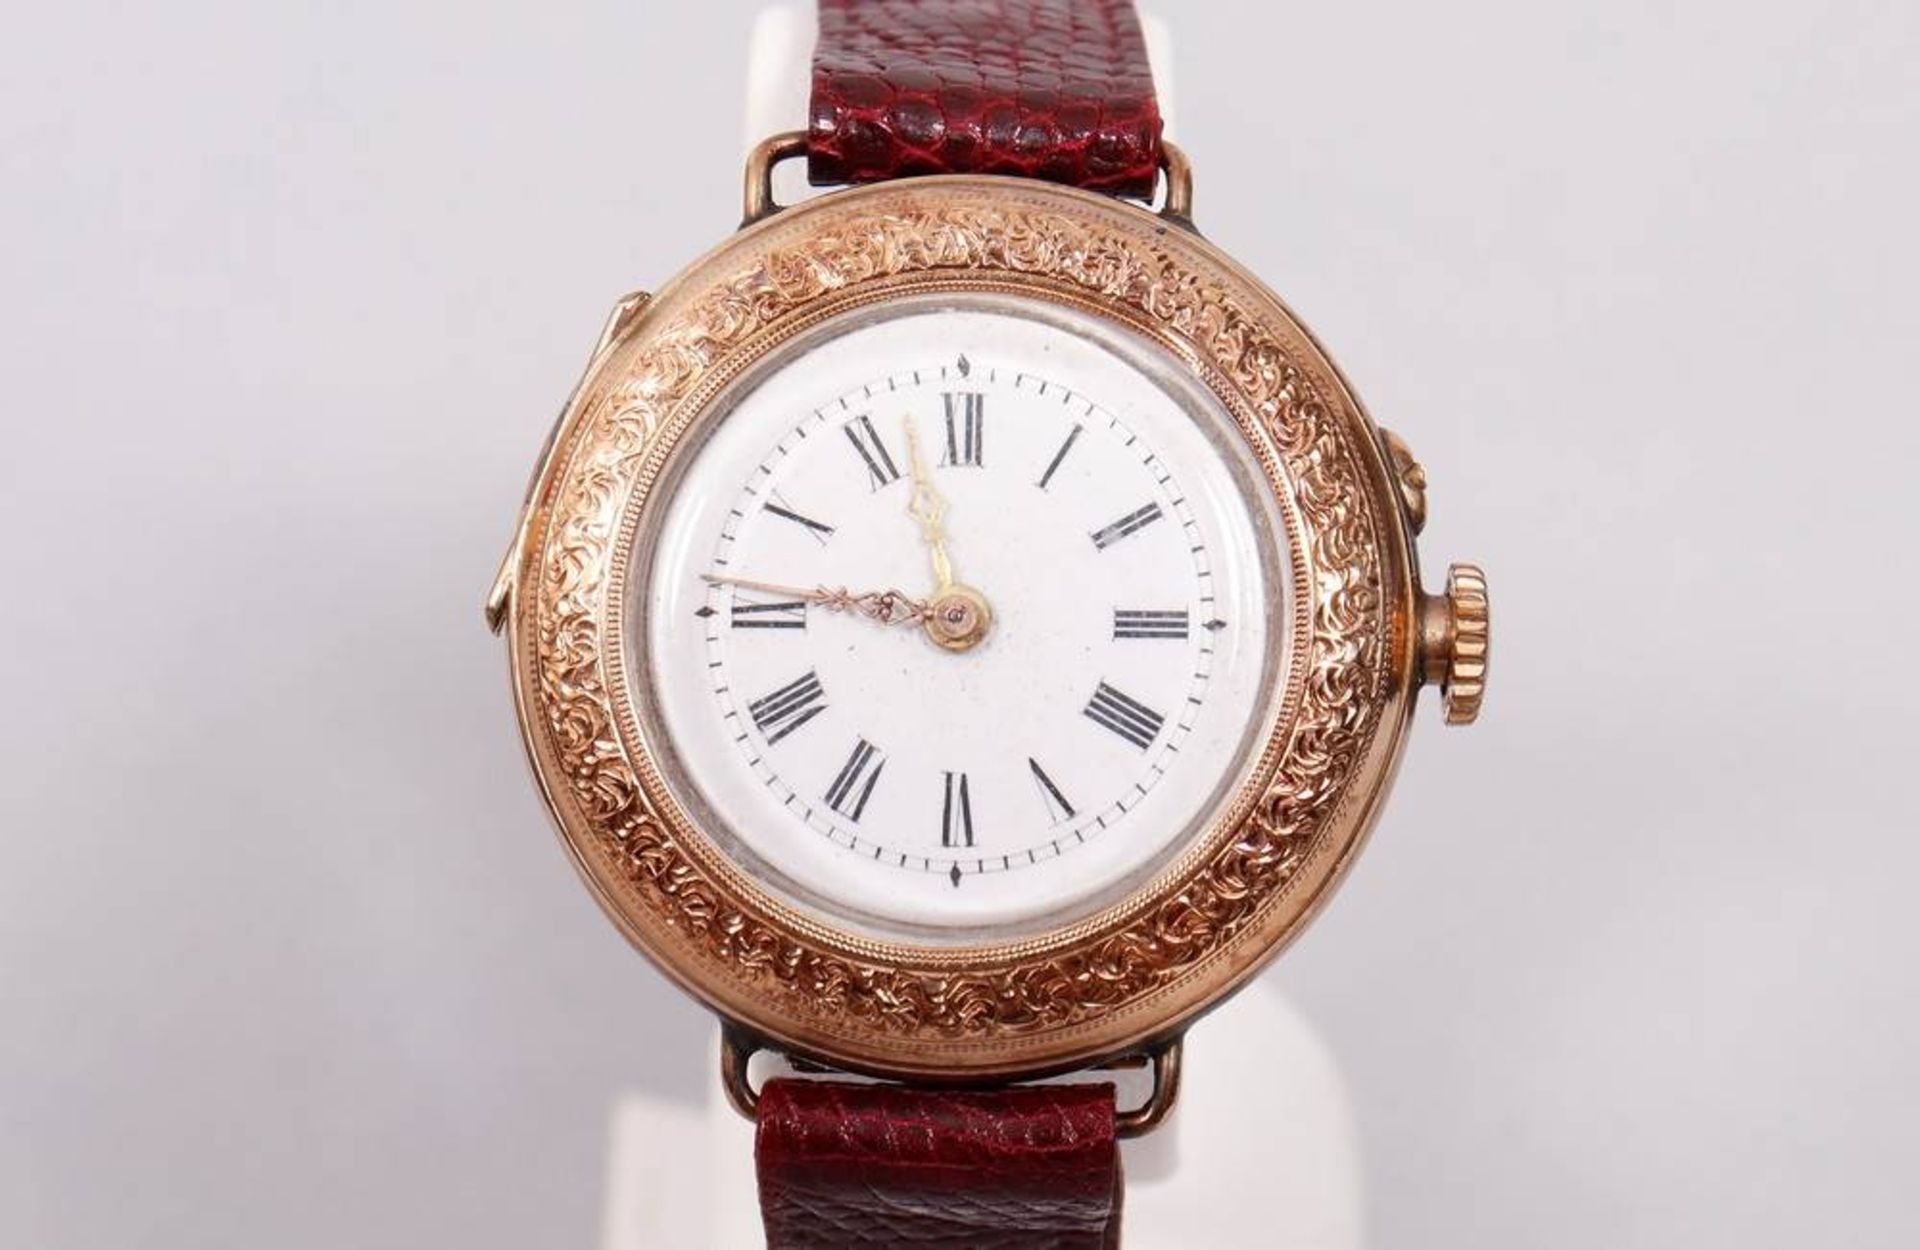 Wrist watch, 585 GG, 1st half 20th C. - Image 3 of 5